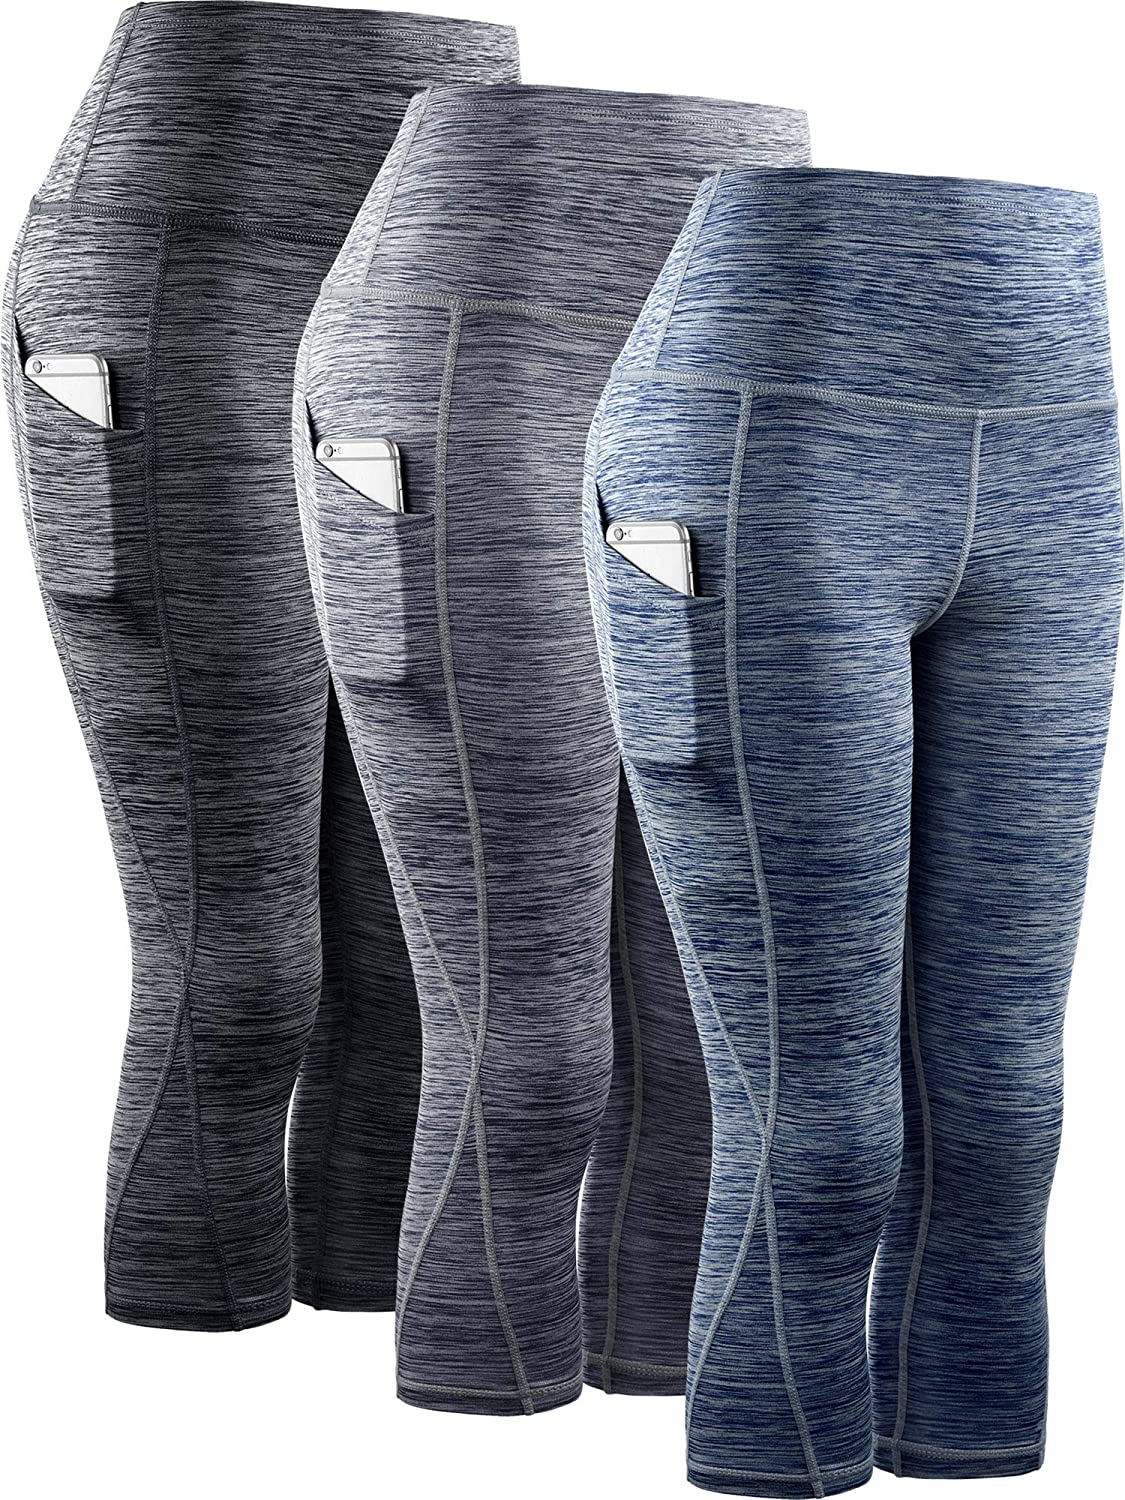 Neleus Women's Yoga Pants Tummy Control High Waist Workout Leggings with 2 Pocket 